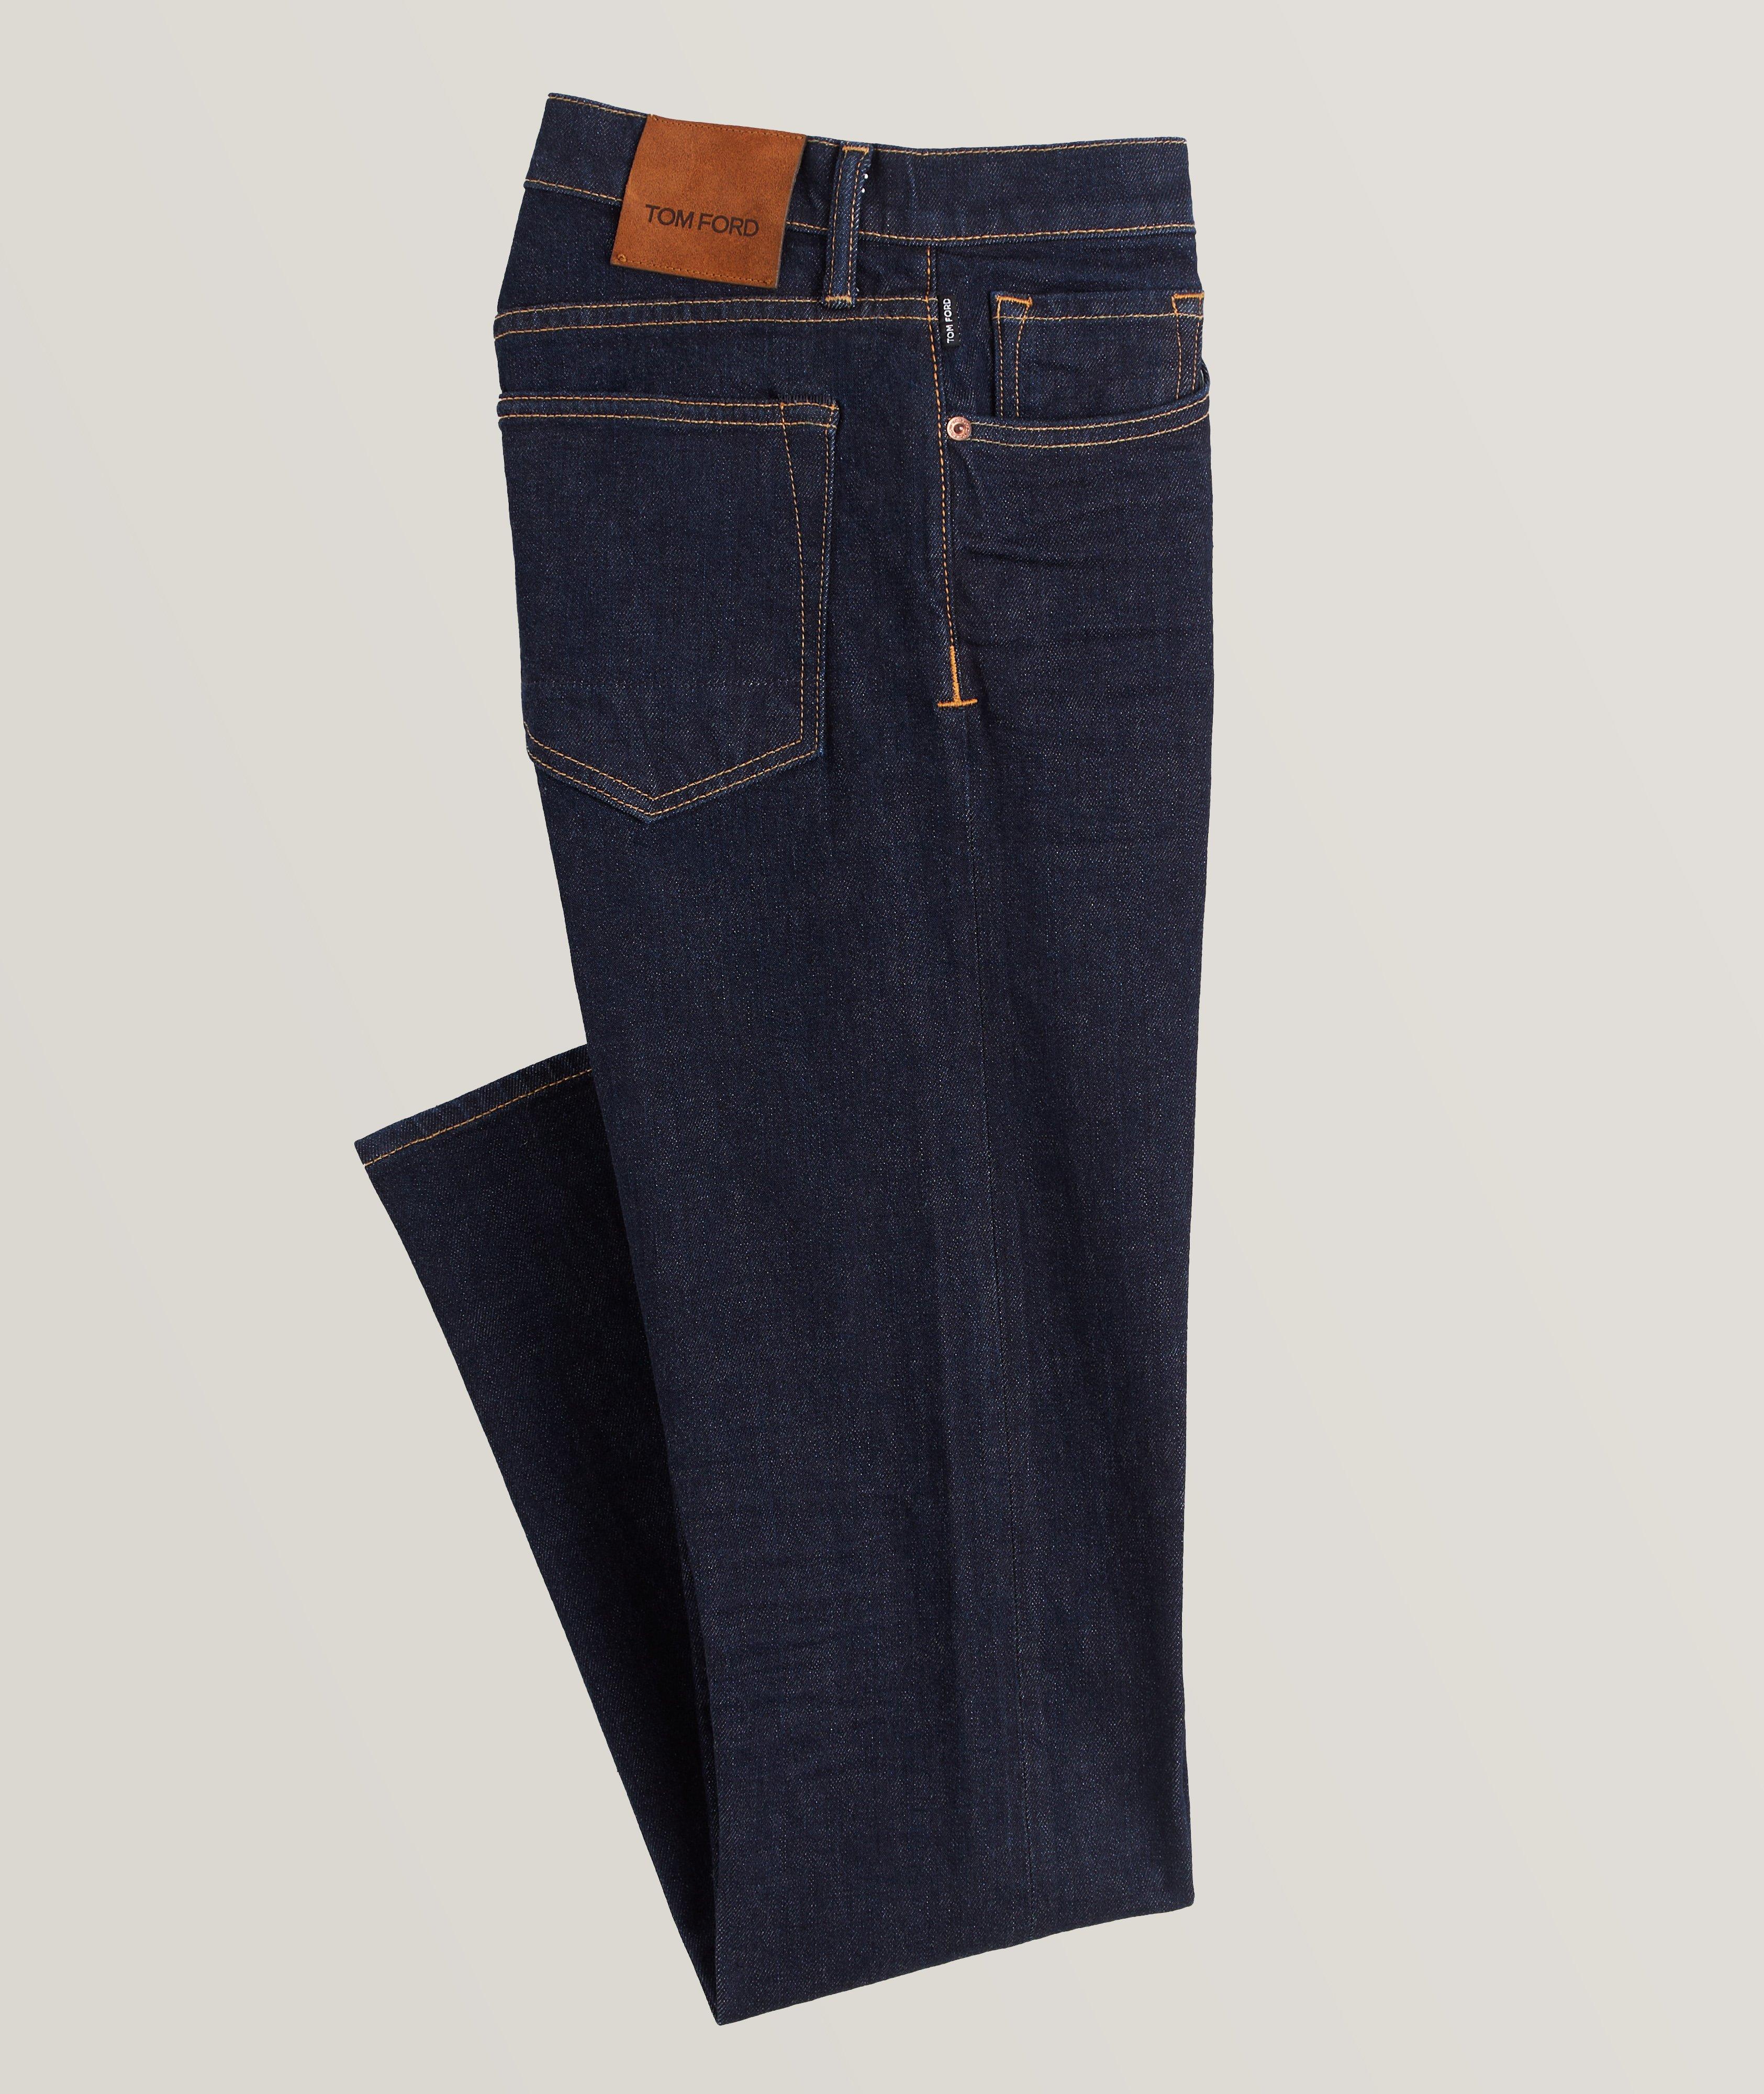 Slim Fit Japanese Selvedge Jeans image 0